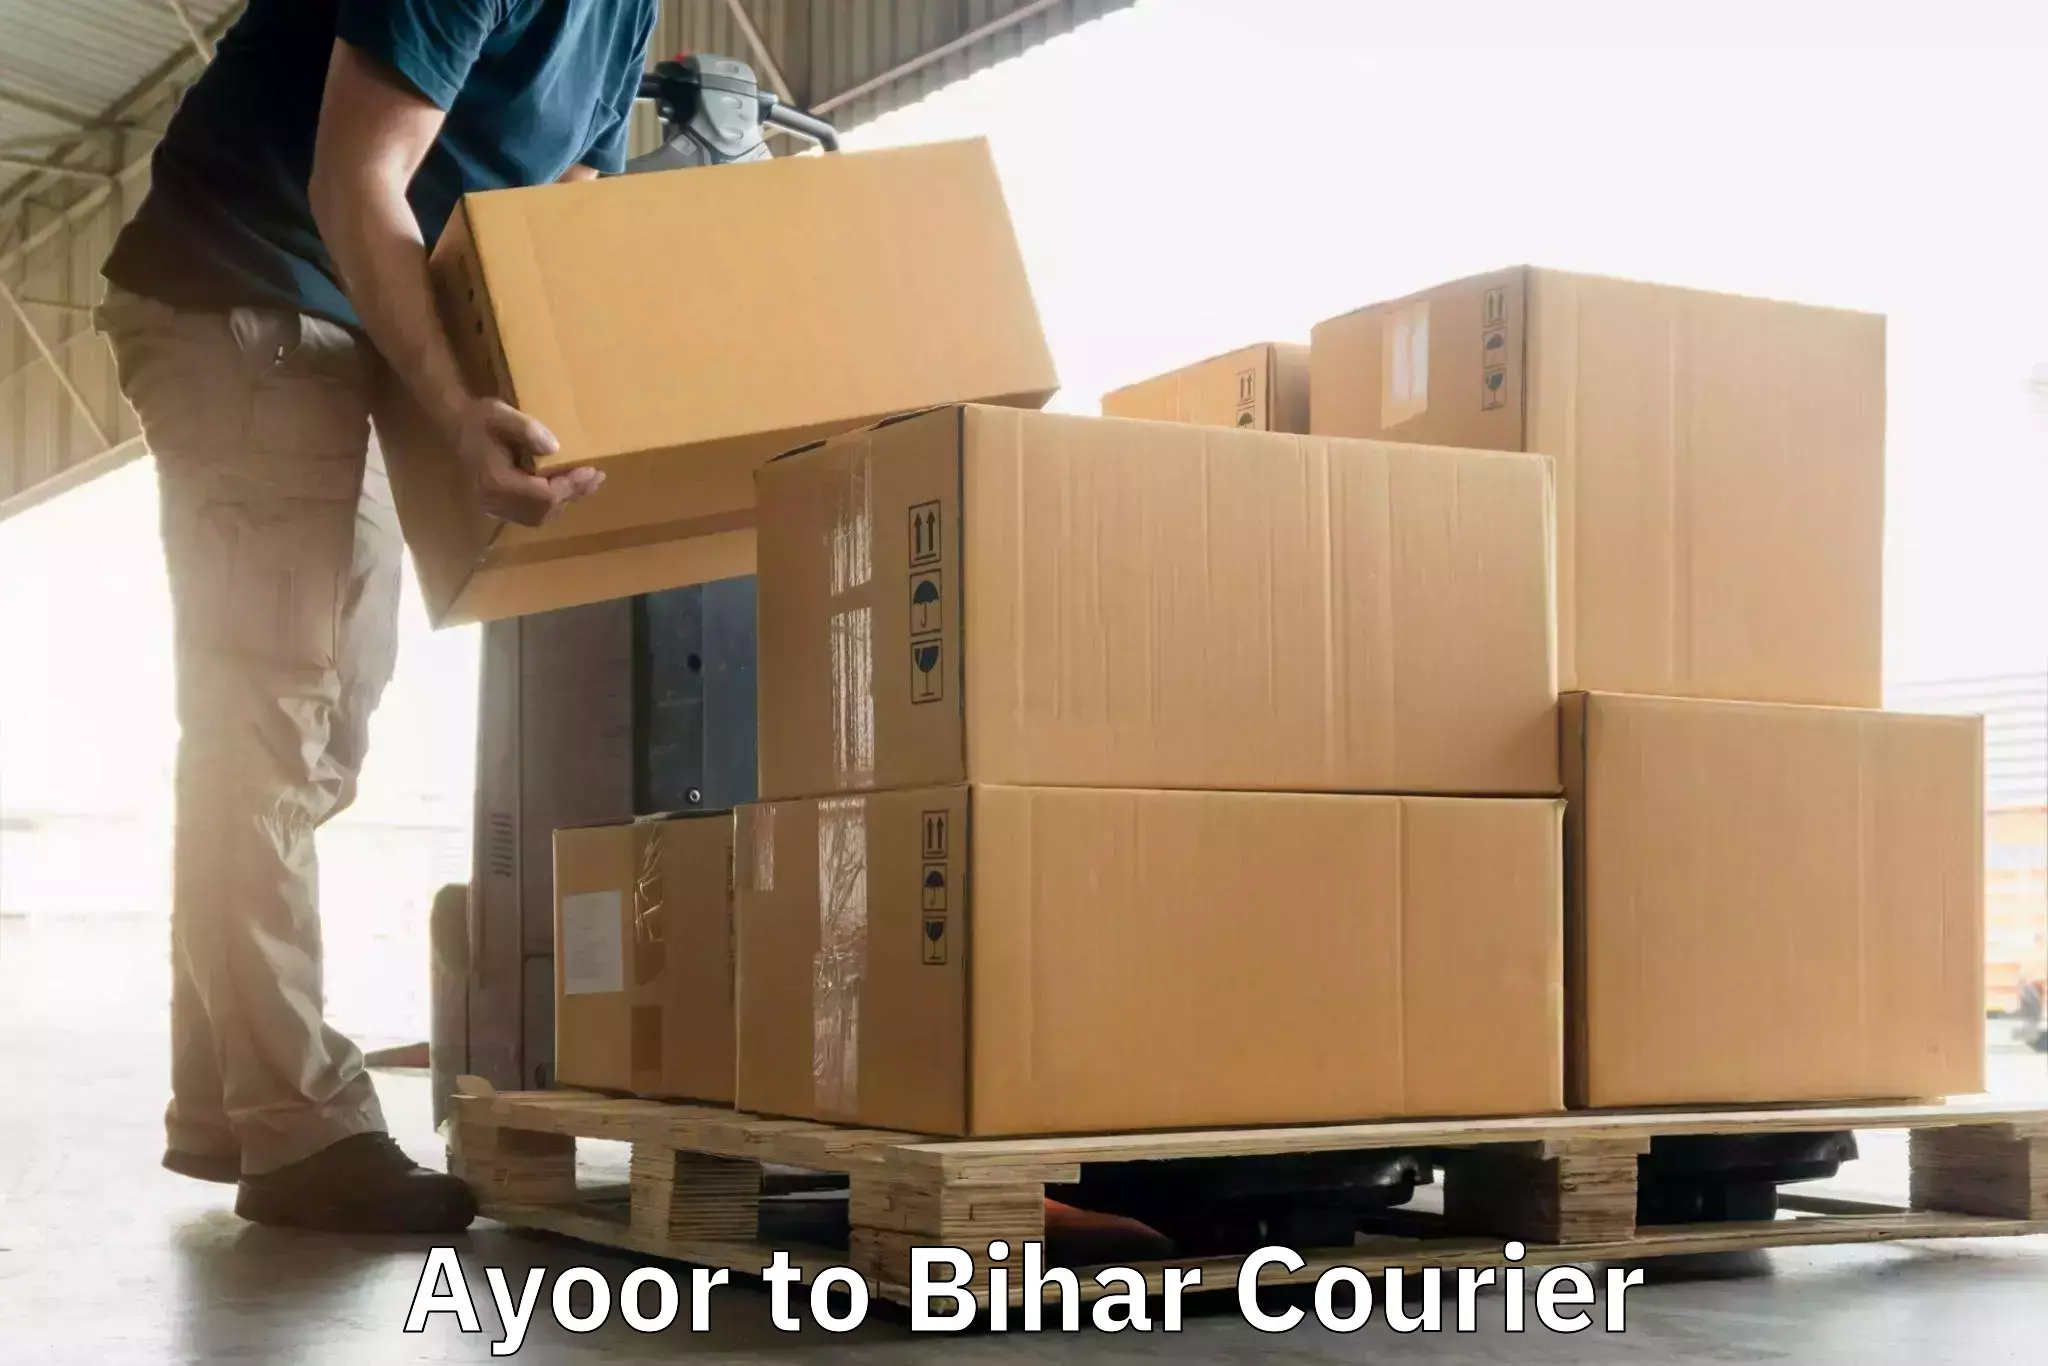 Express delivery capabilities Ayoor to Barhiya